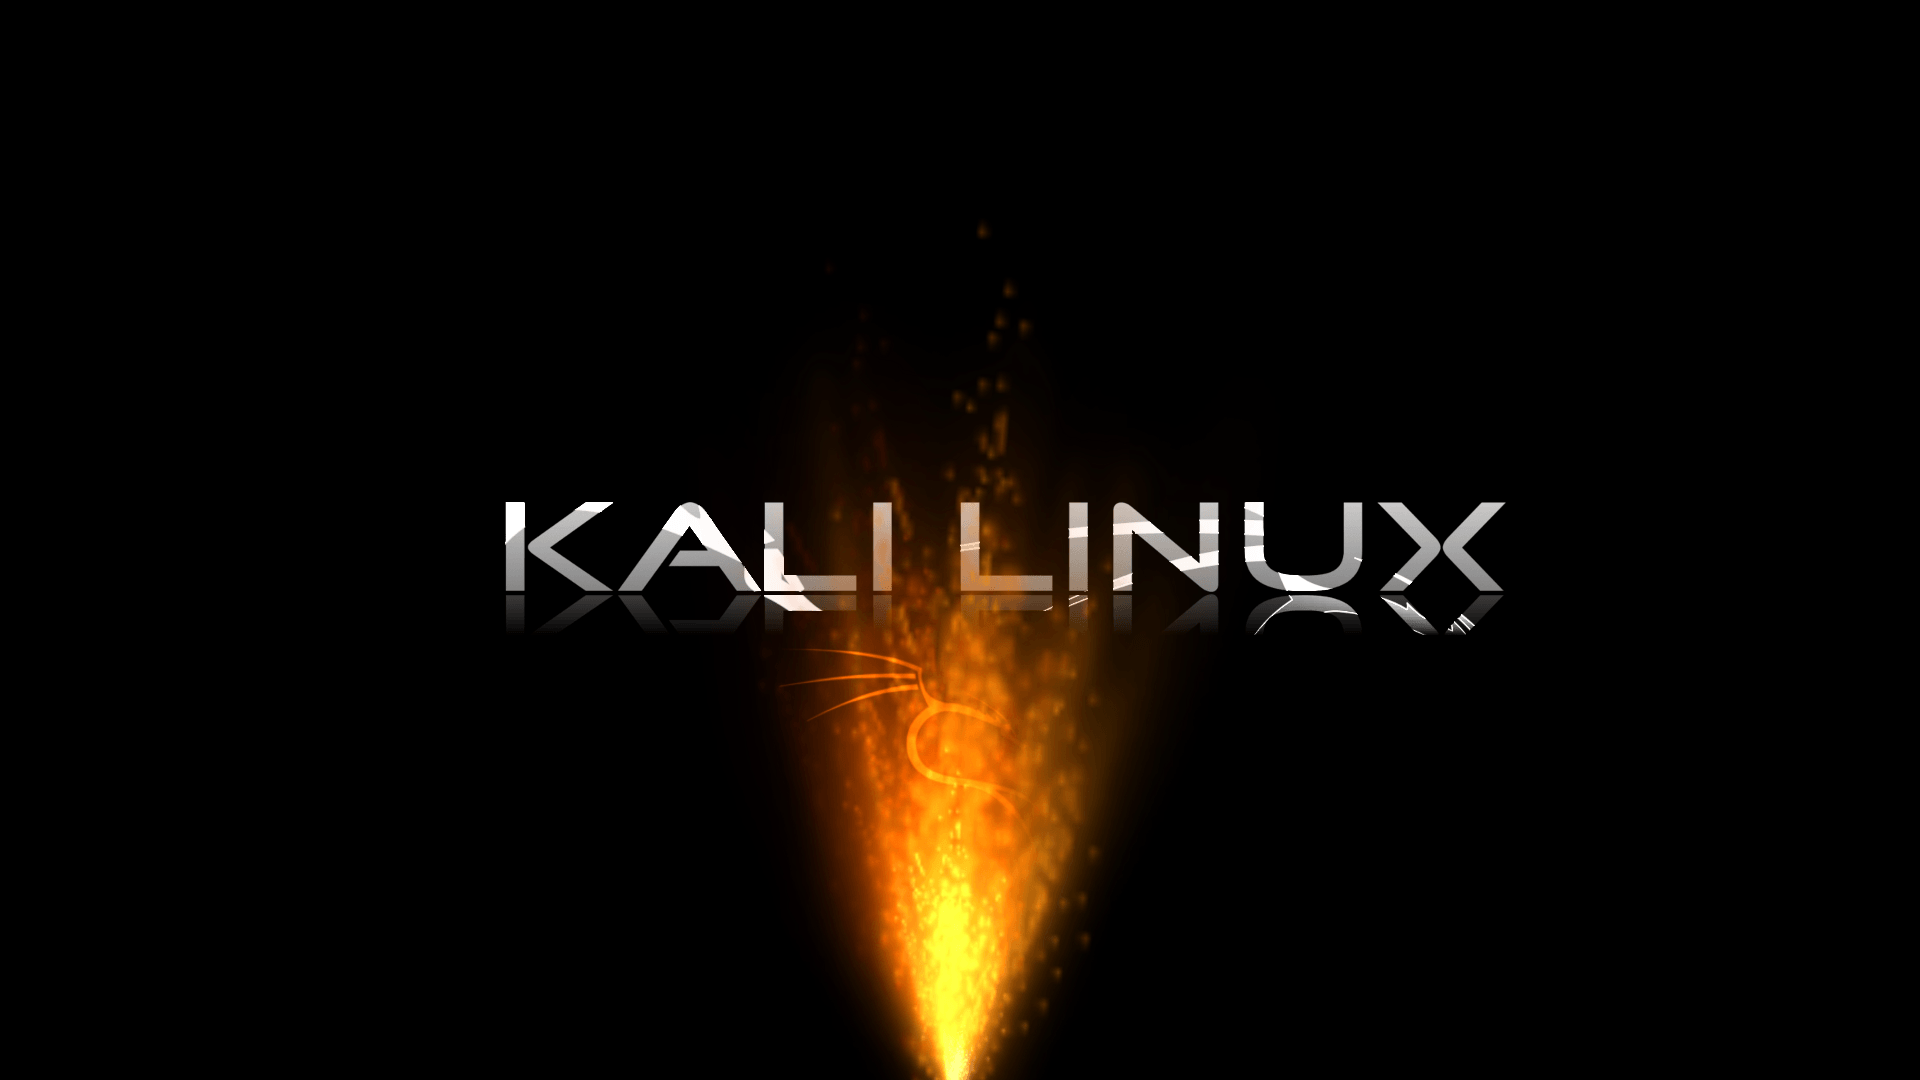 Kali Linux Desktop Wallpaper HD. Kali Linux Wallpaper, Background